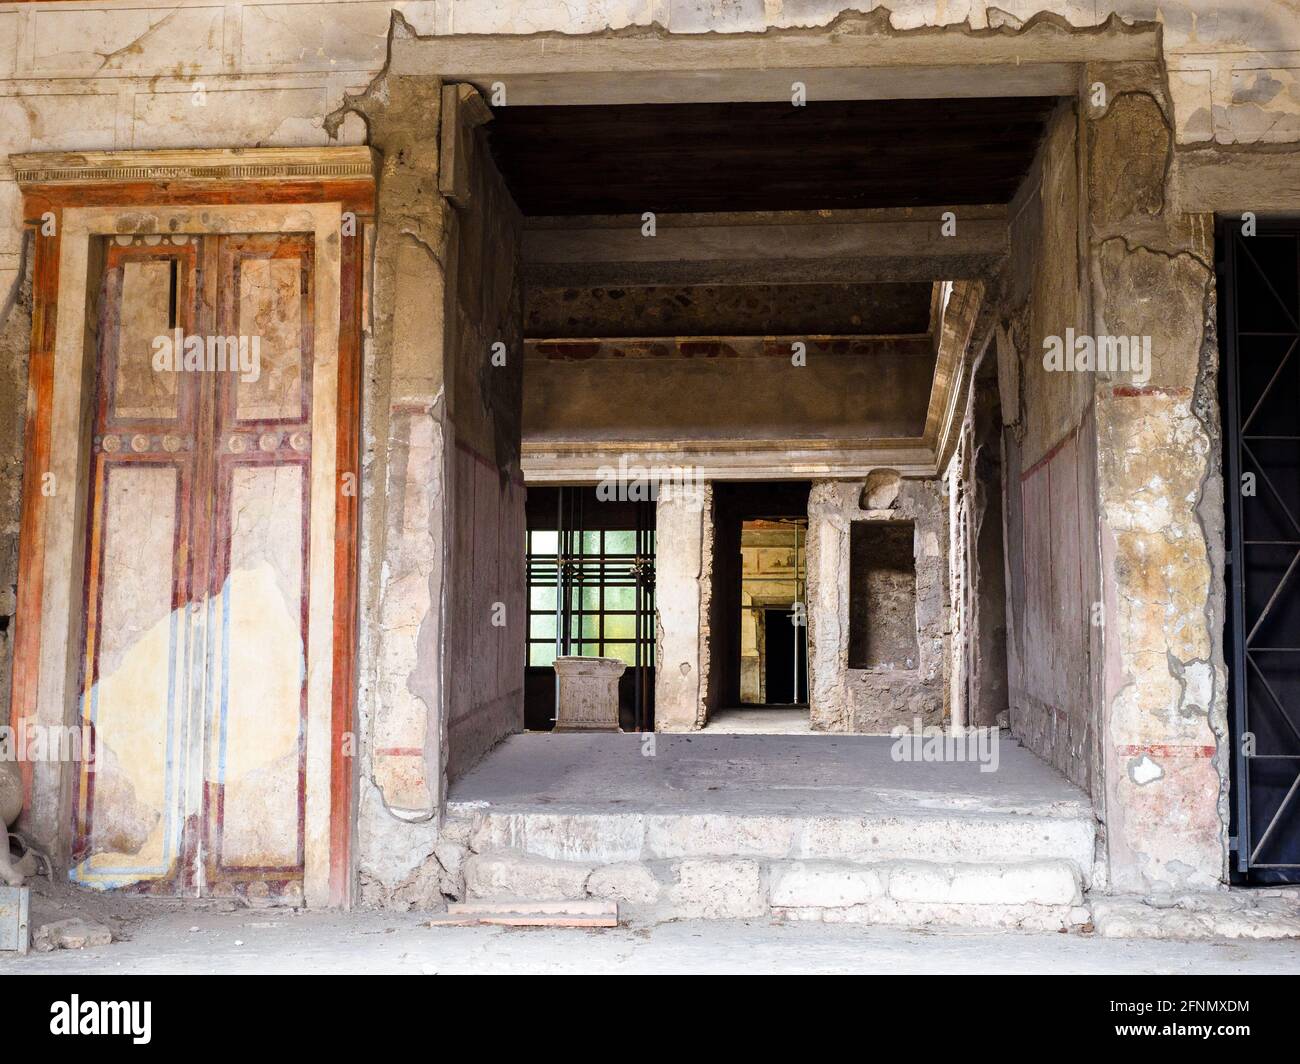 House of C. Julius Polybius (Casa di Giulio Polibio) - Pompeii archaeological site, Italy Stock Photo